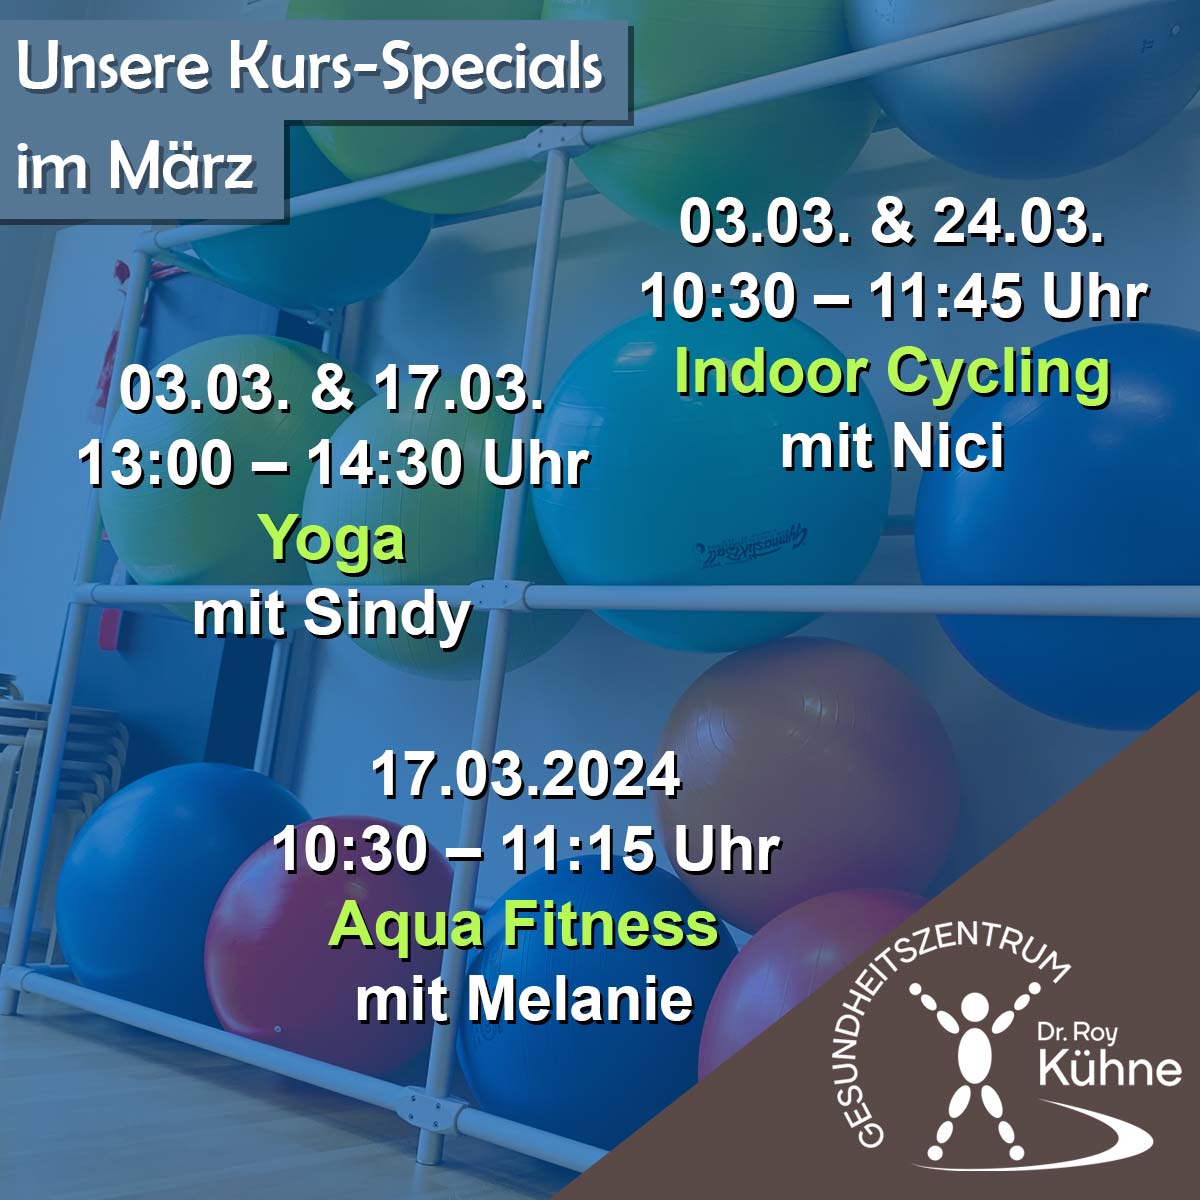 Special Fitnesskurse im Gesundheitszentrum Dr. Roy Kühne im Maerz, Aqua Fitness, Yoga, Indoor Cycling